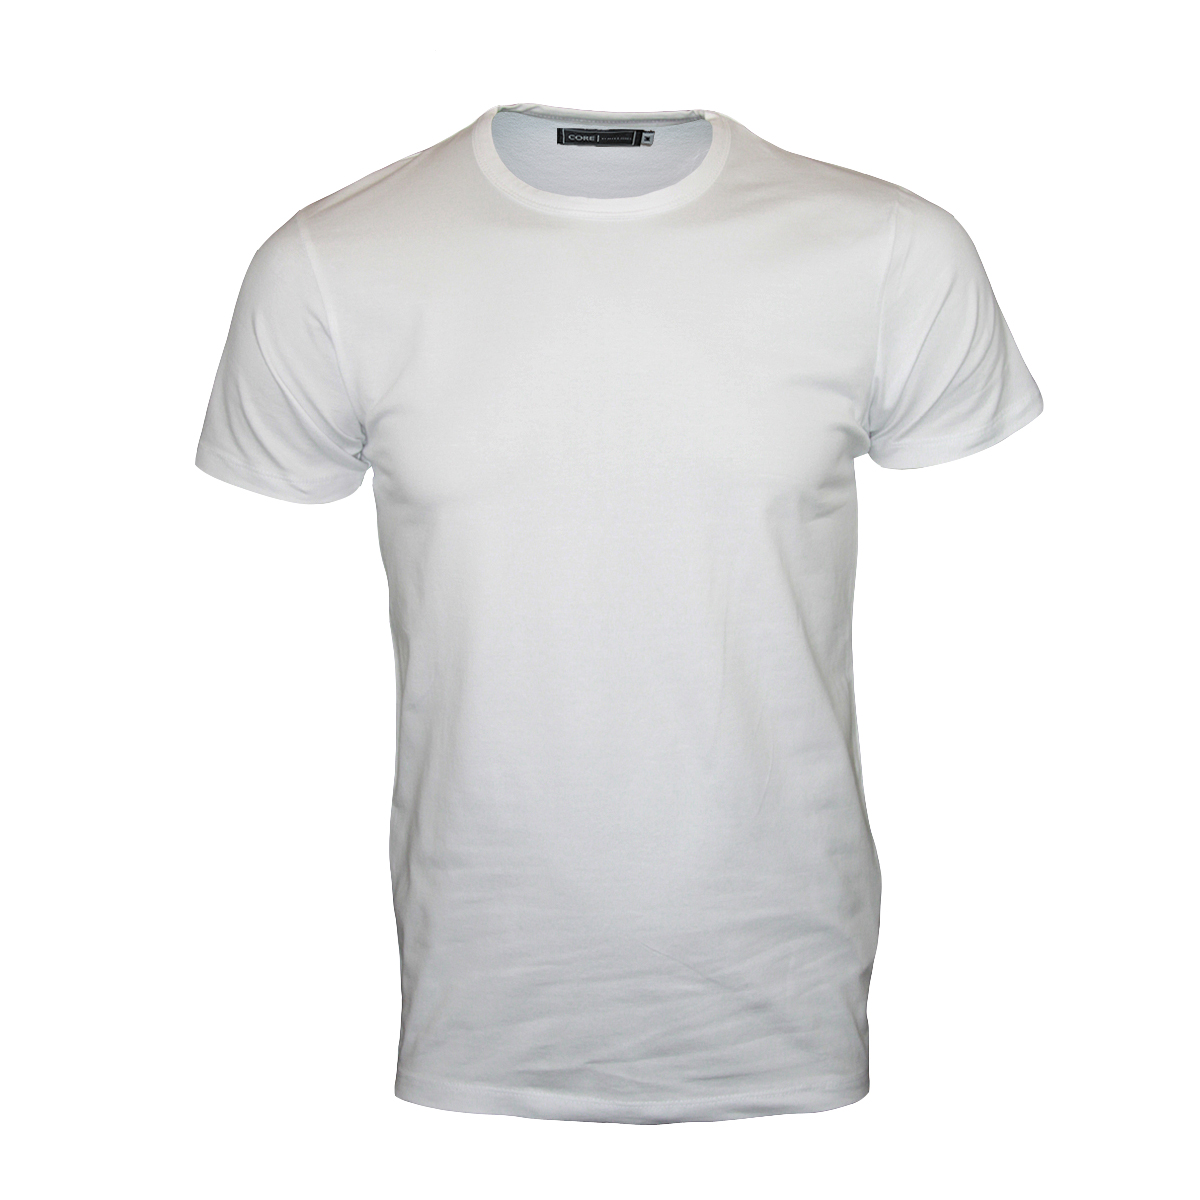 Plain T Shirt Designs - ClipArt Best